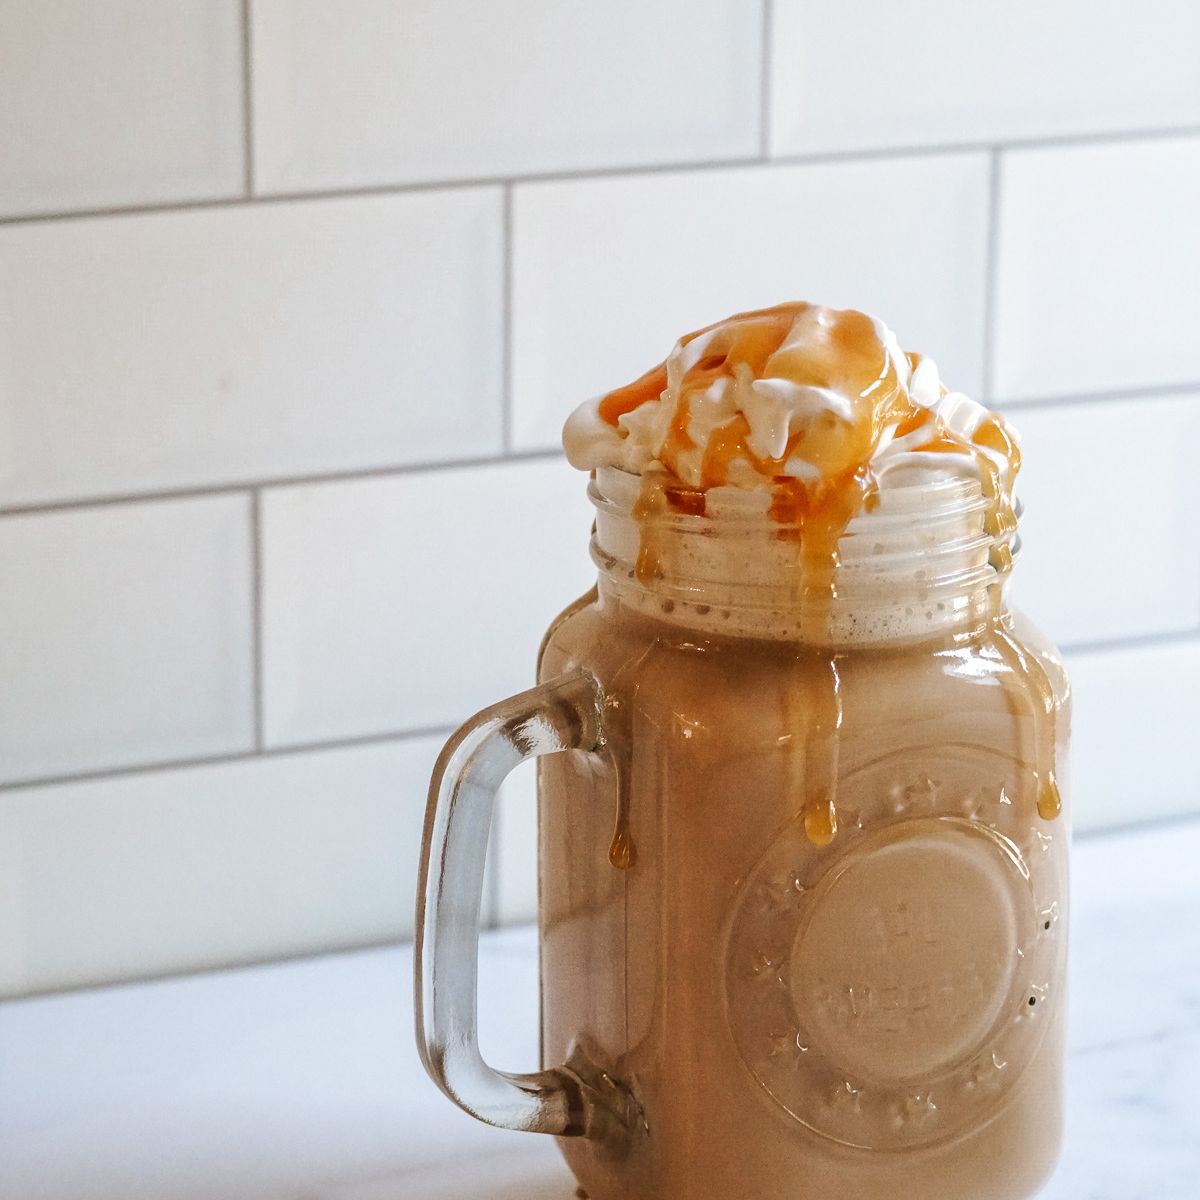 Starbucks Caramel Brulee Latte in a clear mug